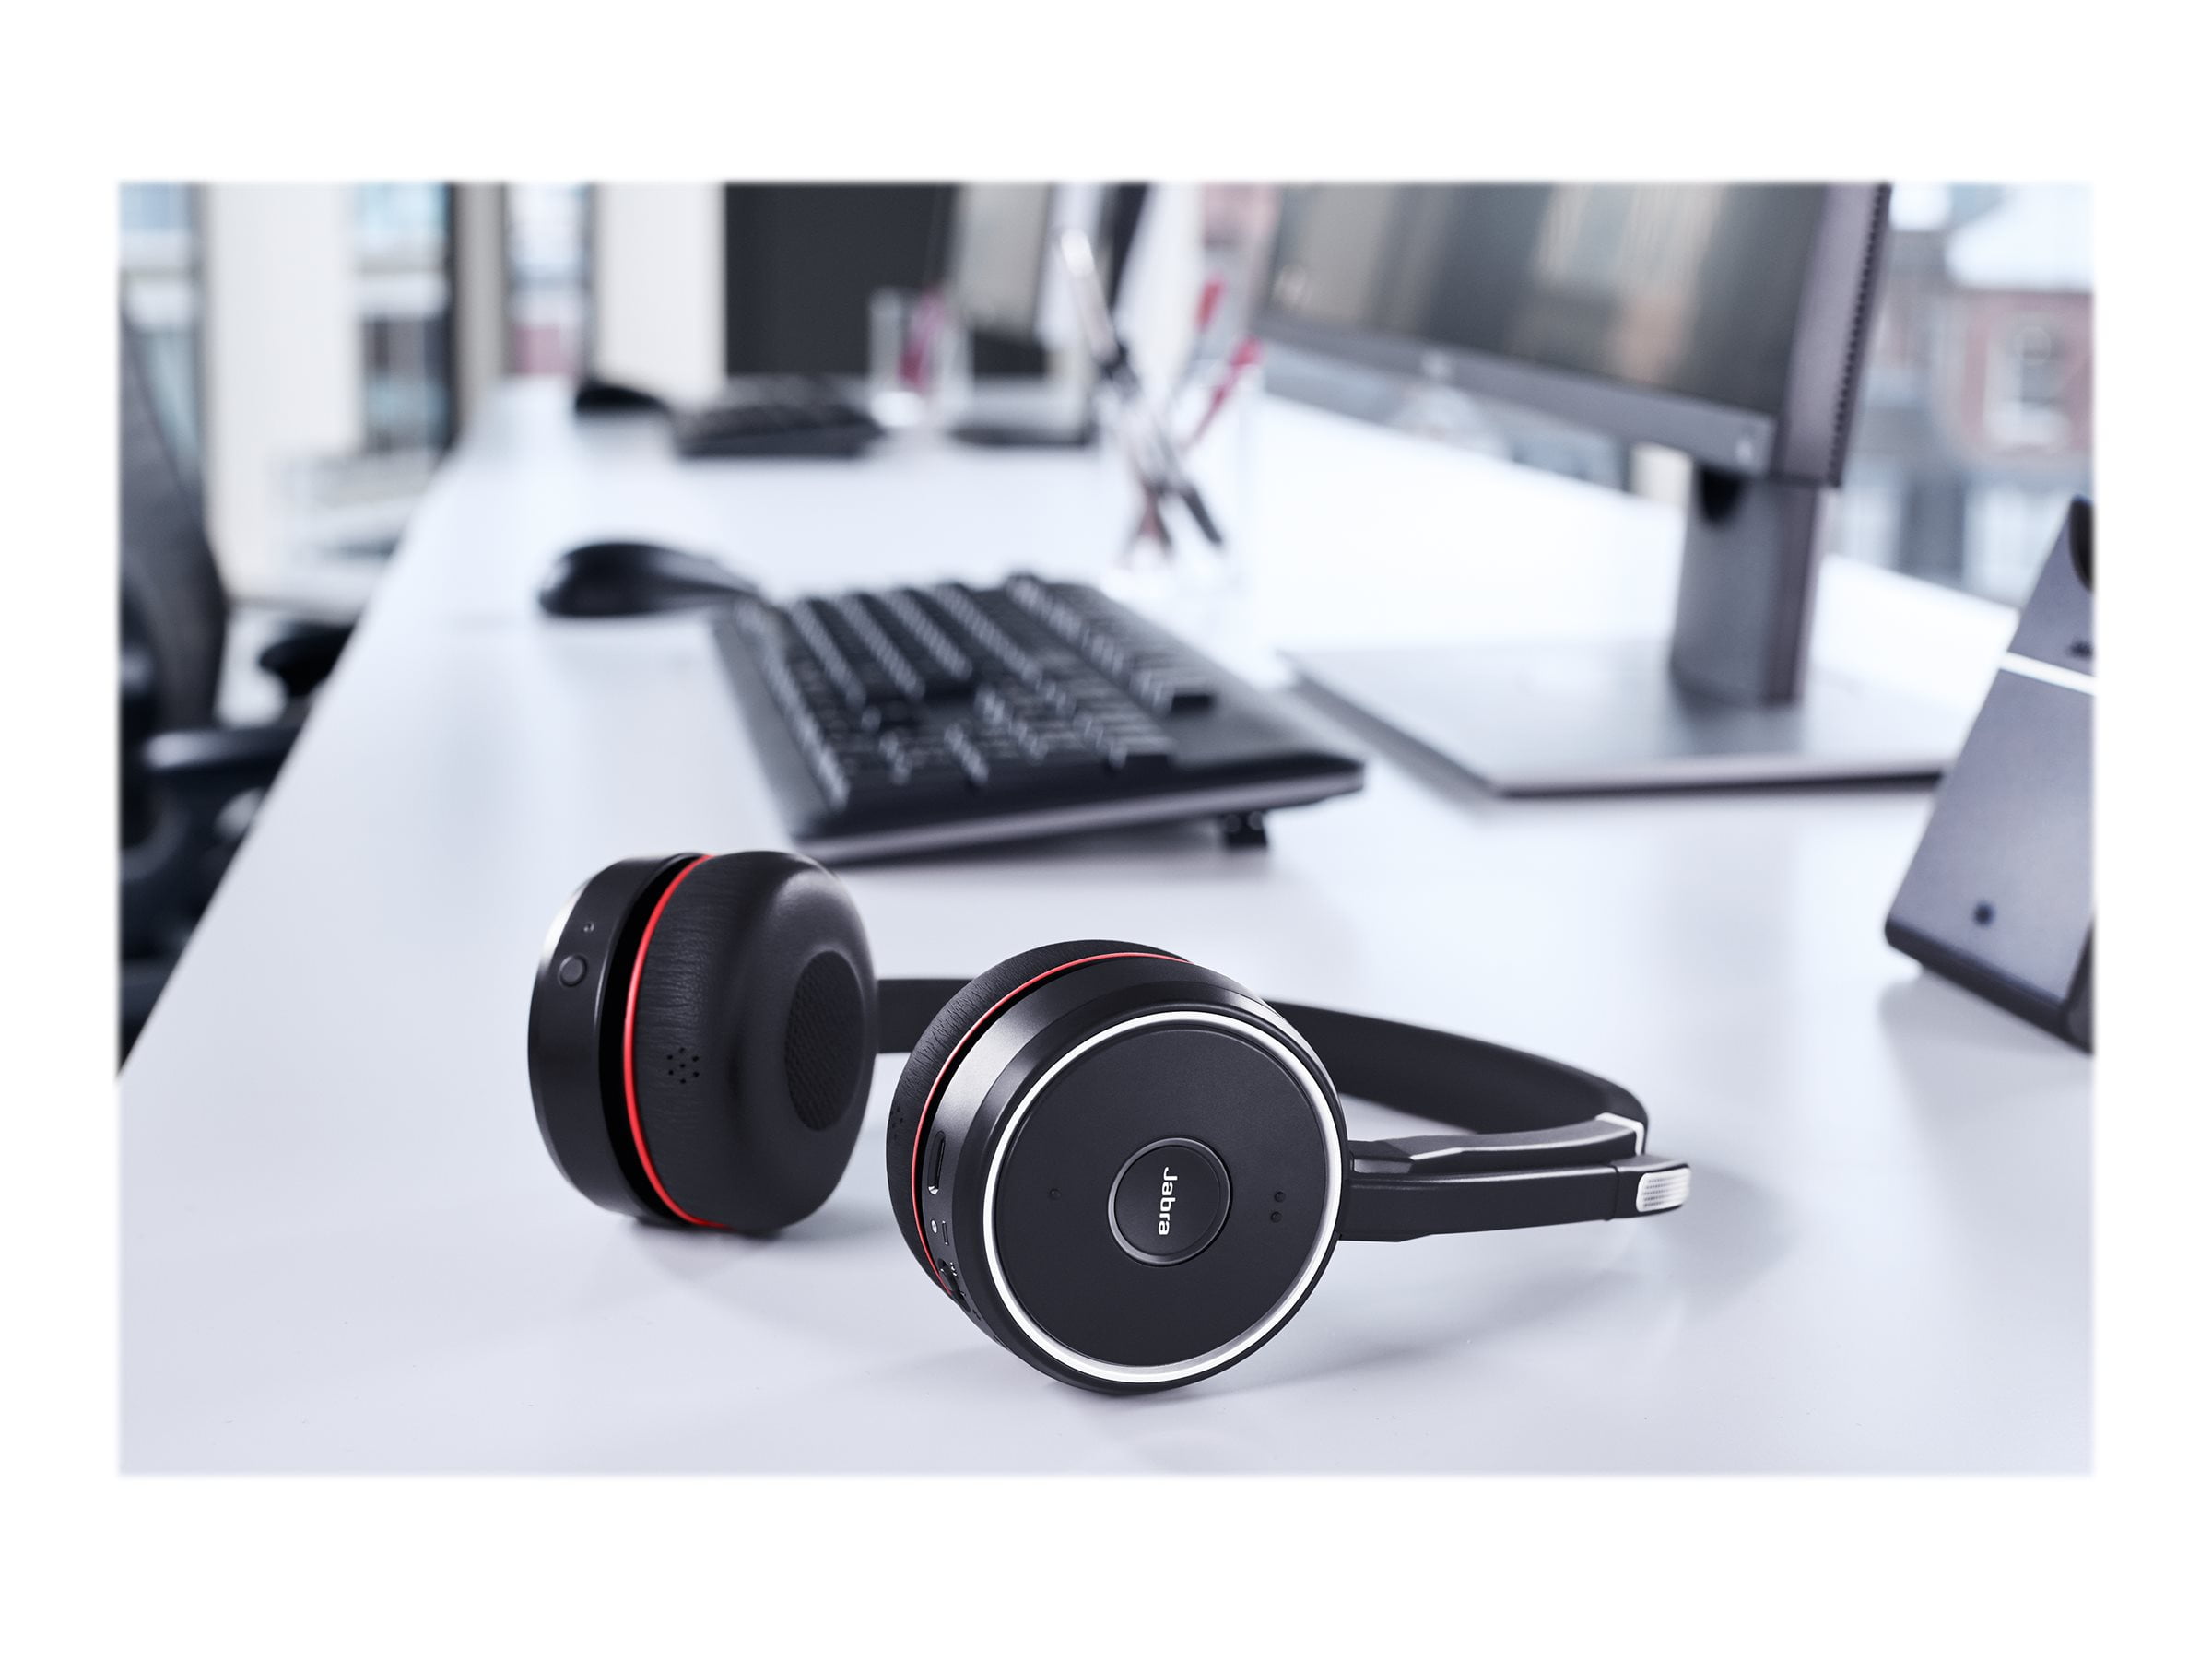 Jabra Evolve 75 UC Stereo Wireless Bluetooth Headset / Music Headphones  Including Link 370 (US Retail Packaging), Black